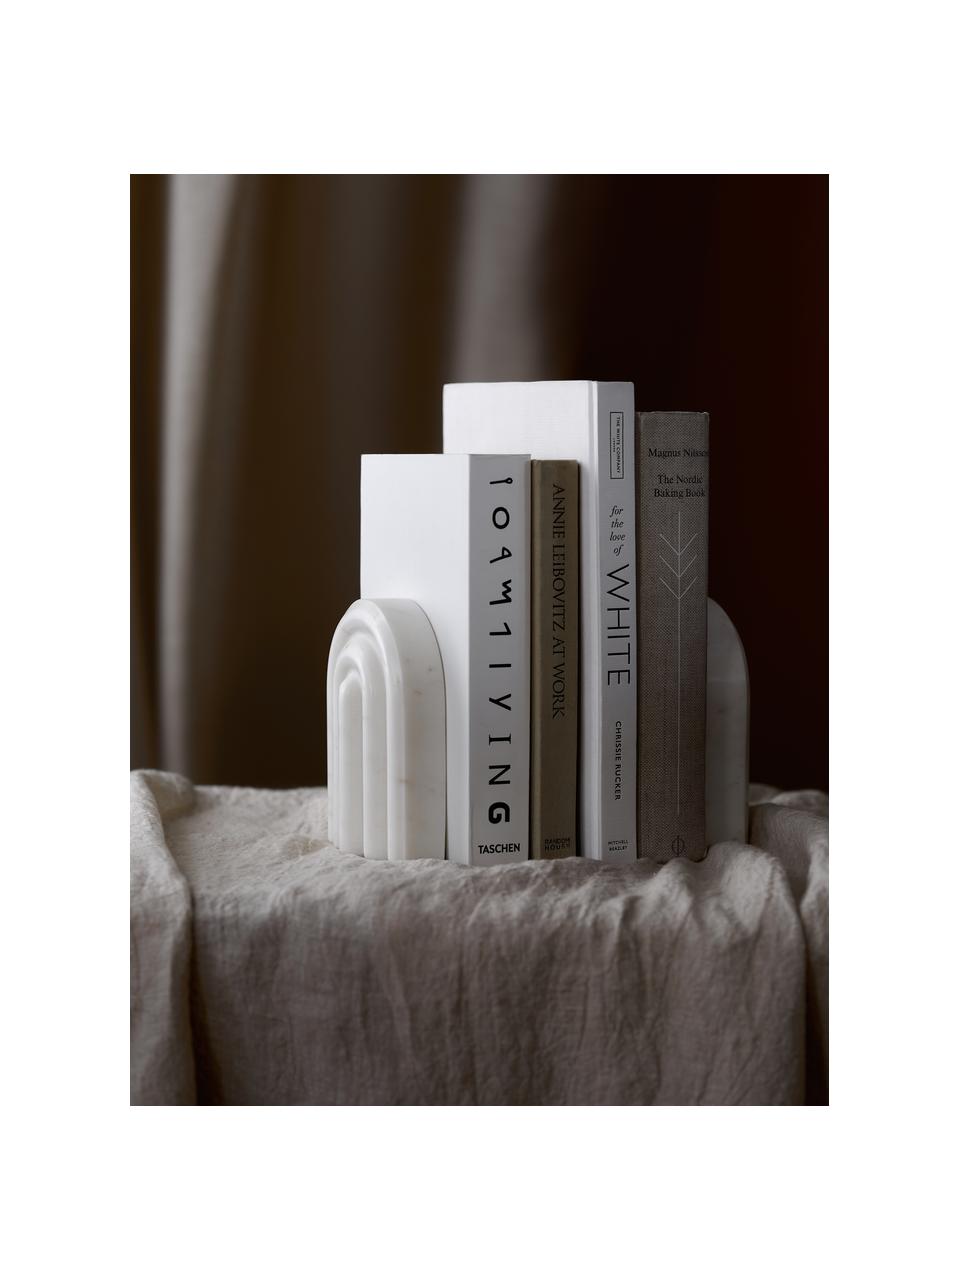 Marmeren boekensteun Malie, 2 stuks, Marmer, Wit marmer, B 12 x H 16 cm